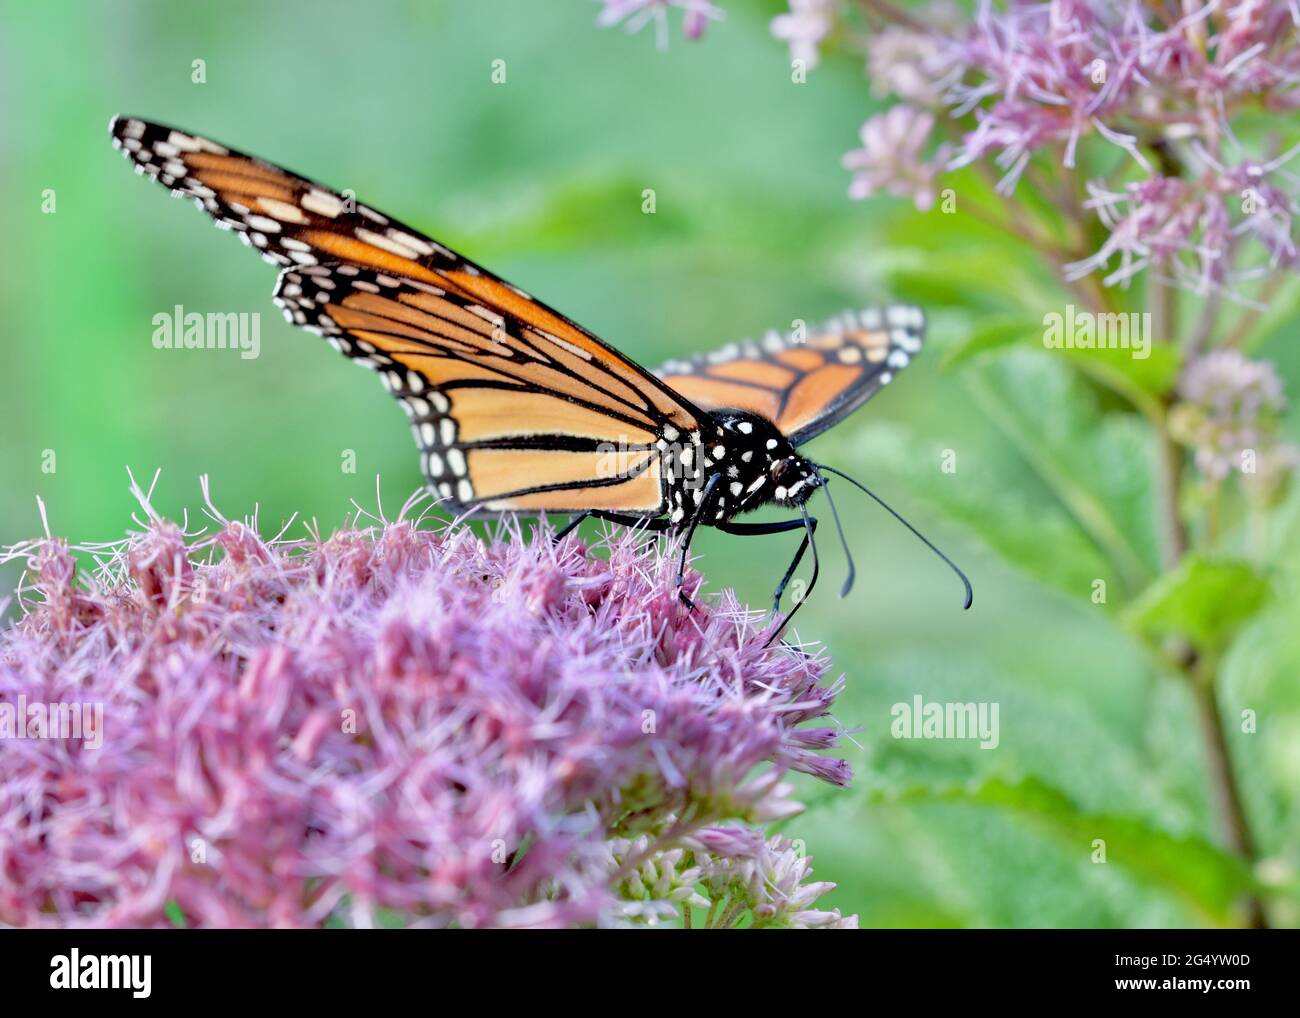 A Monarch butterfly (Danaus plexippus) feeding on the pink flowers of Joe-Pye Weed (Eupatorium purpureum). Copy space. Closeup. Stock Photo